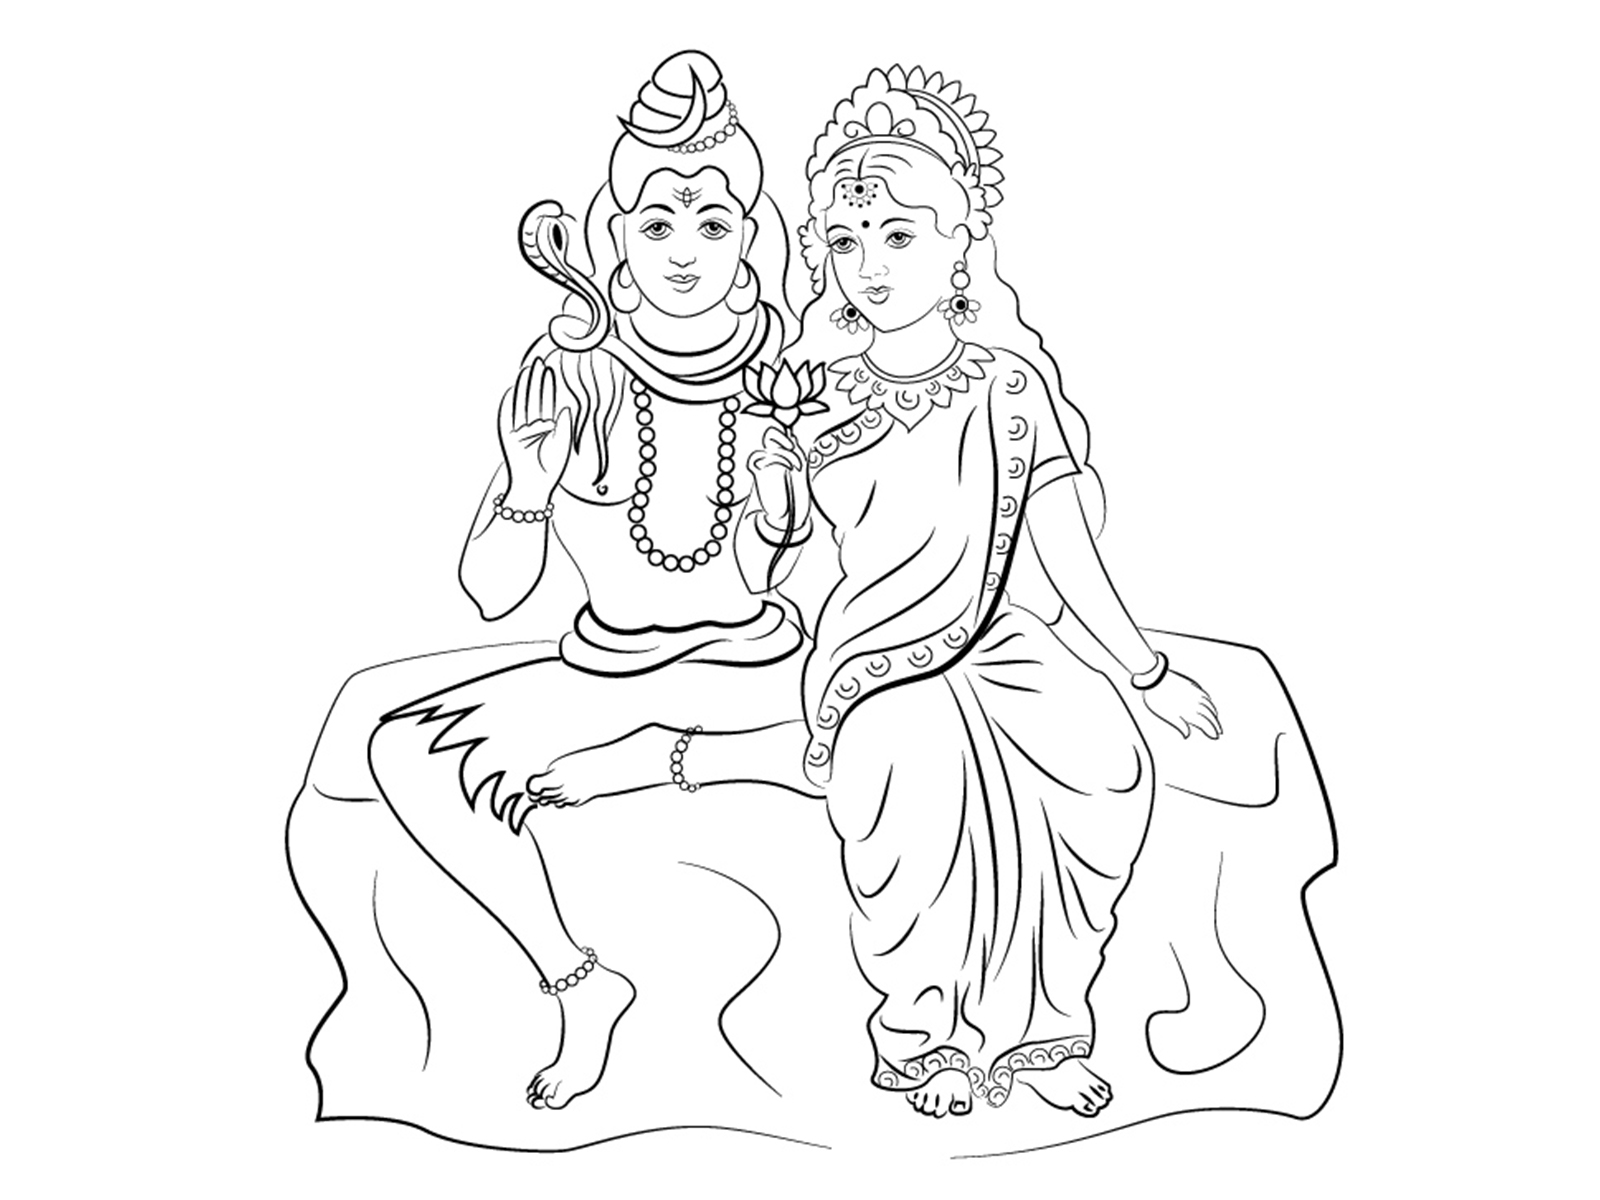 How to draw Lord Ganesha and Kartikeya worshipping lord Shiva and maa  parvati - YouTube